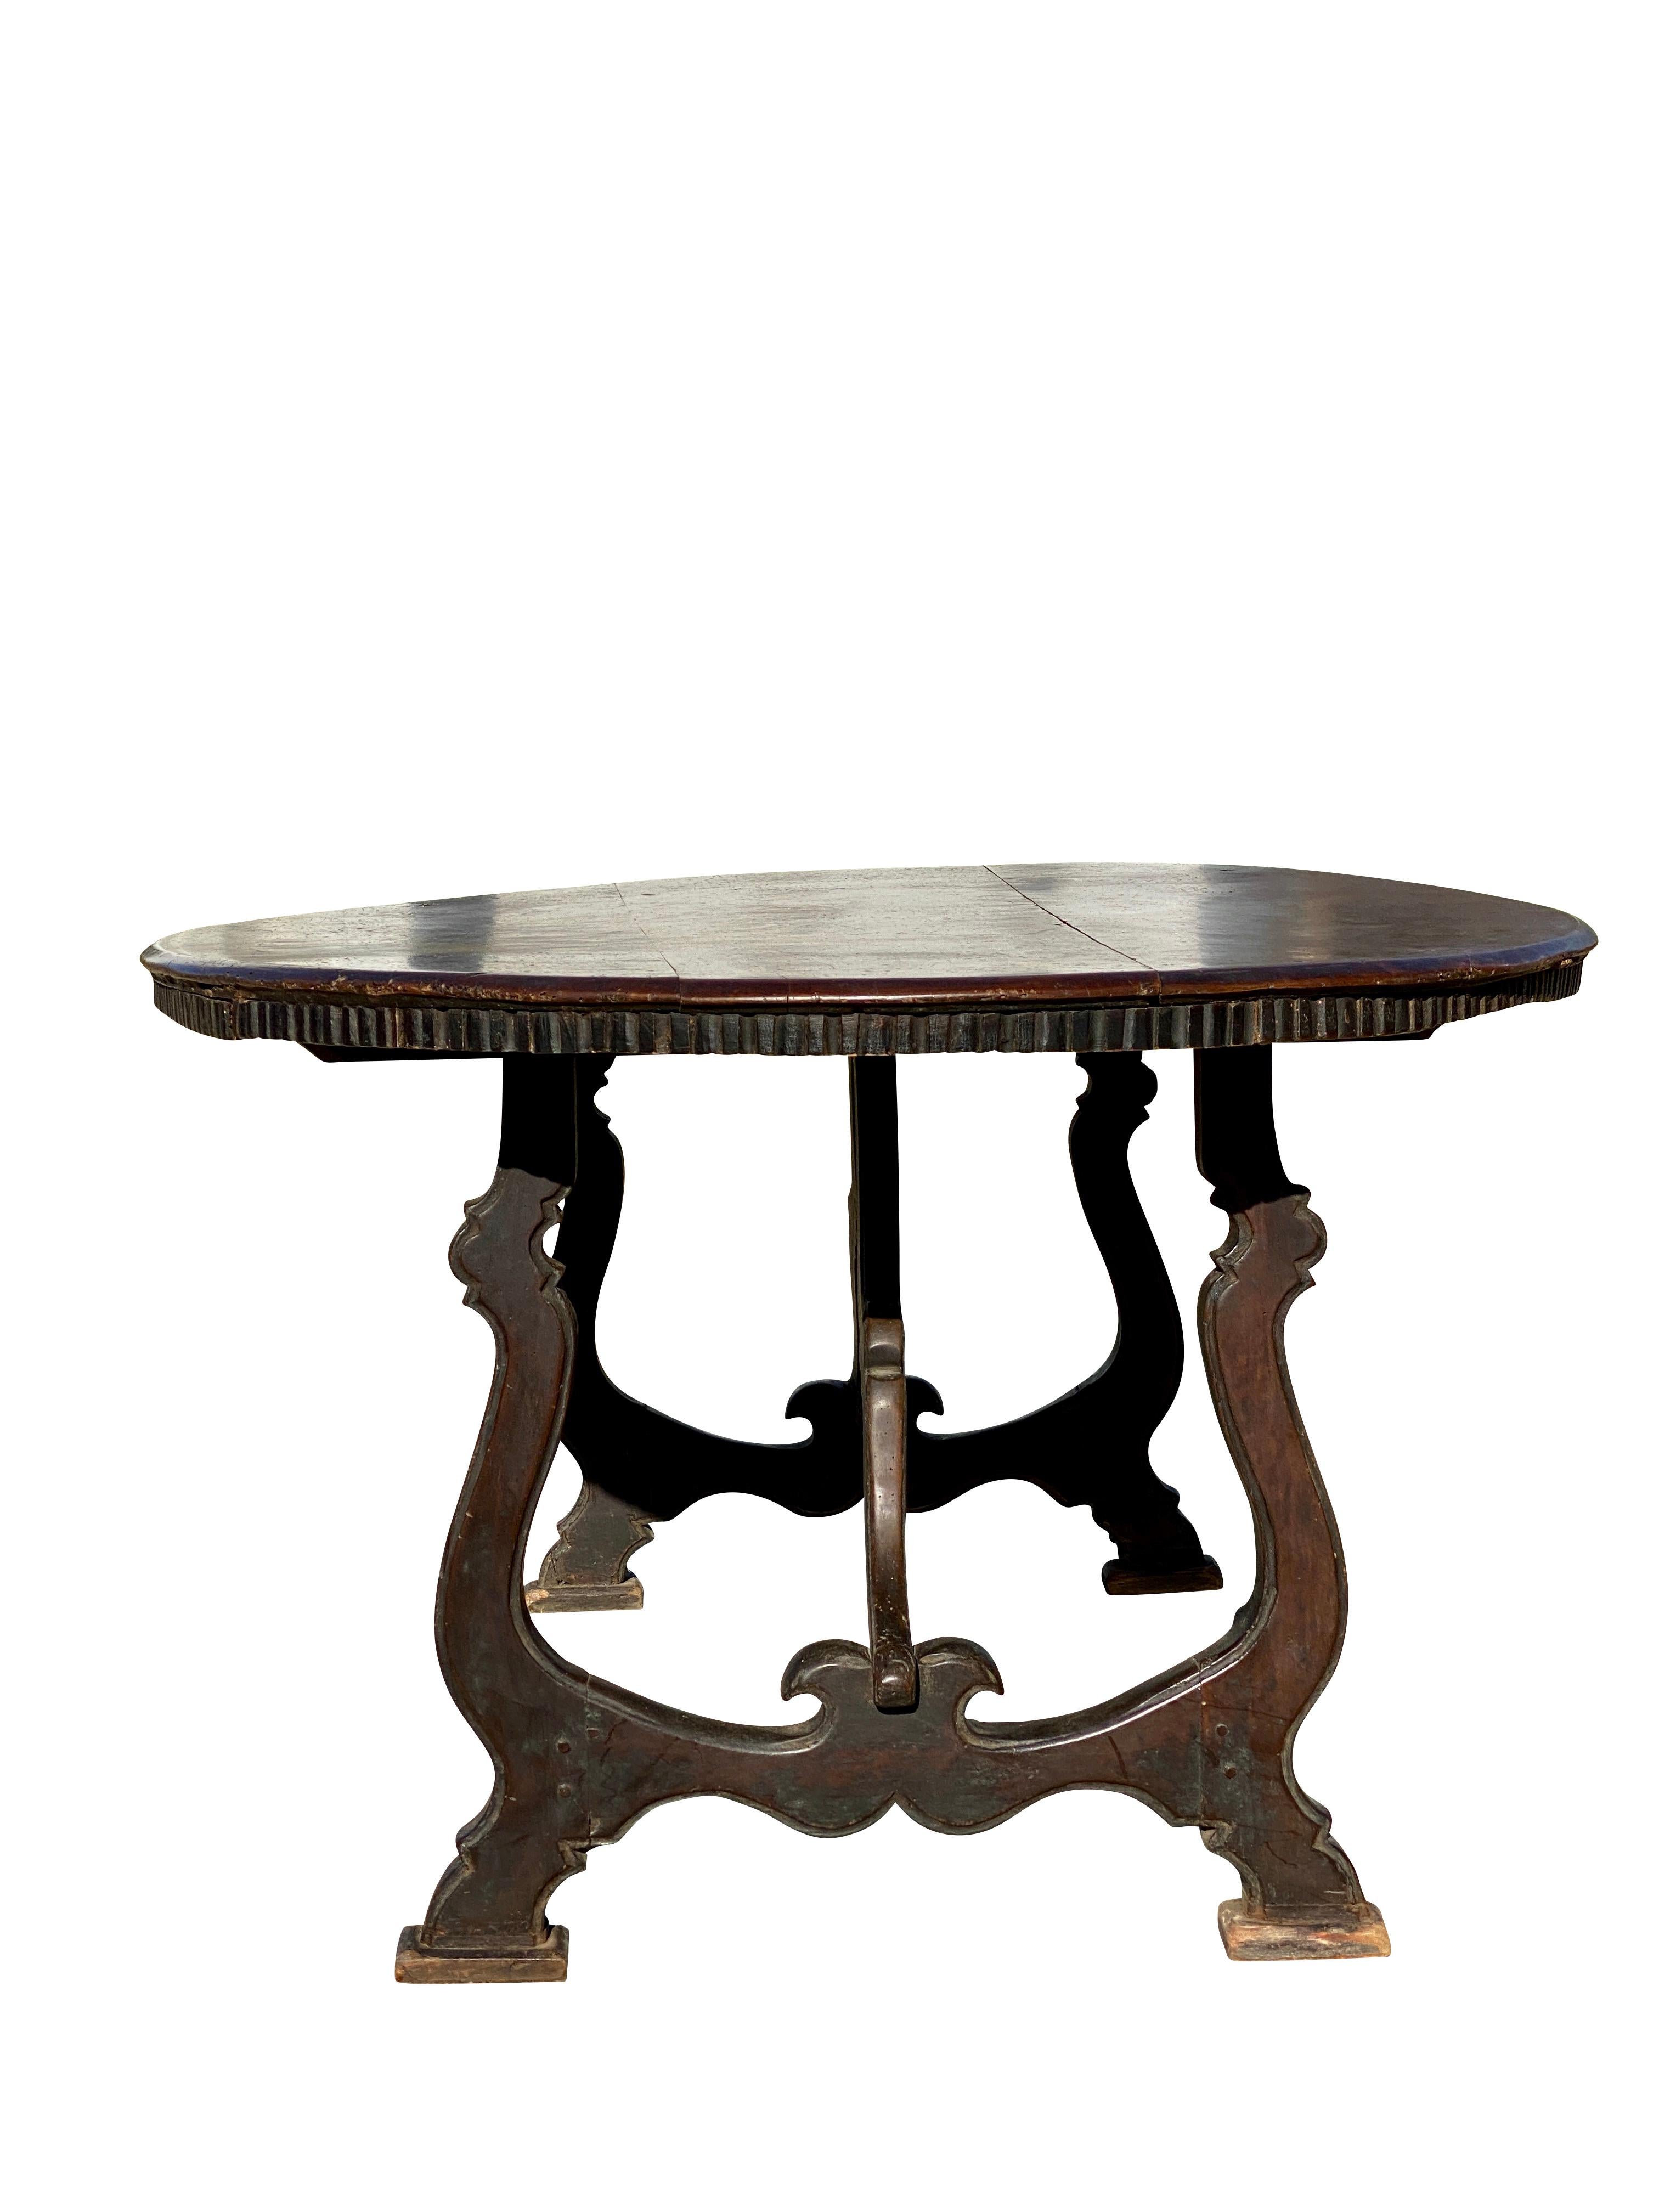 17th Century Italian Baroque Walnut Oval Dining Table